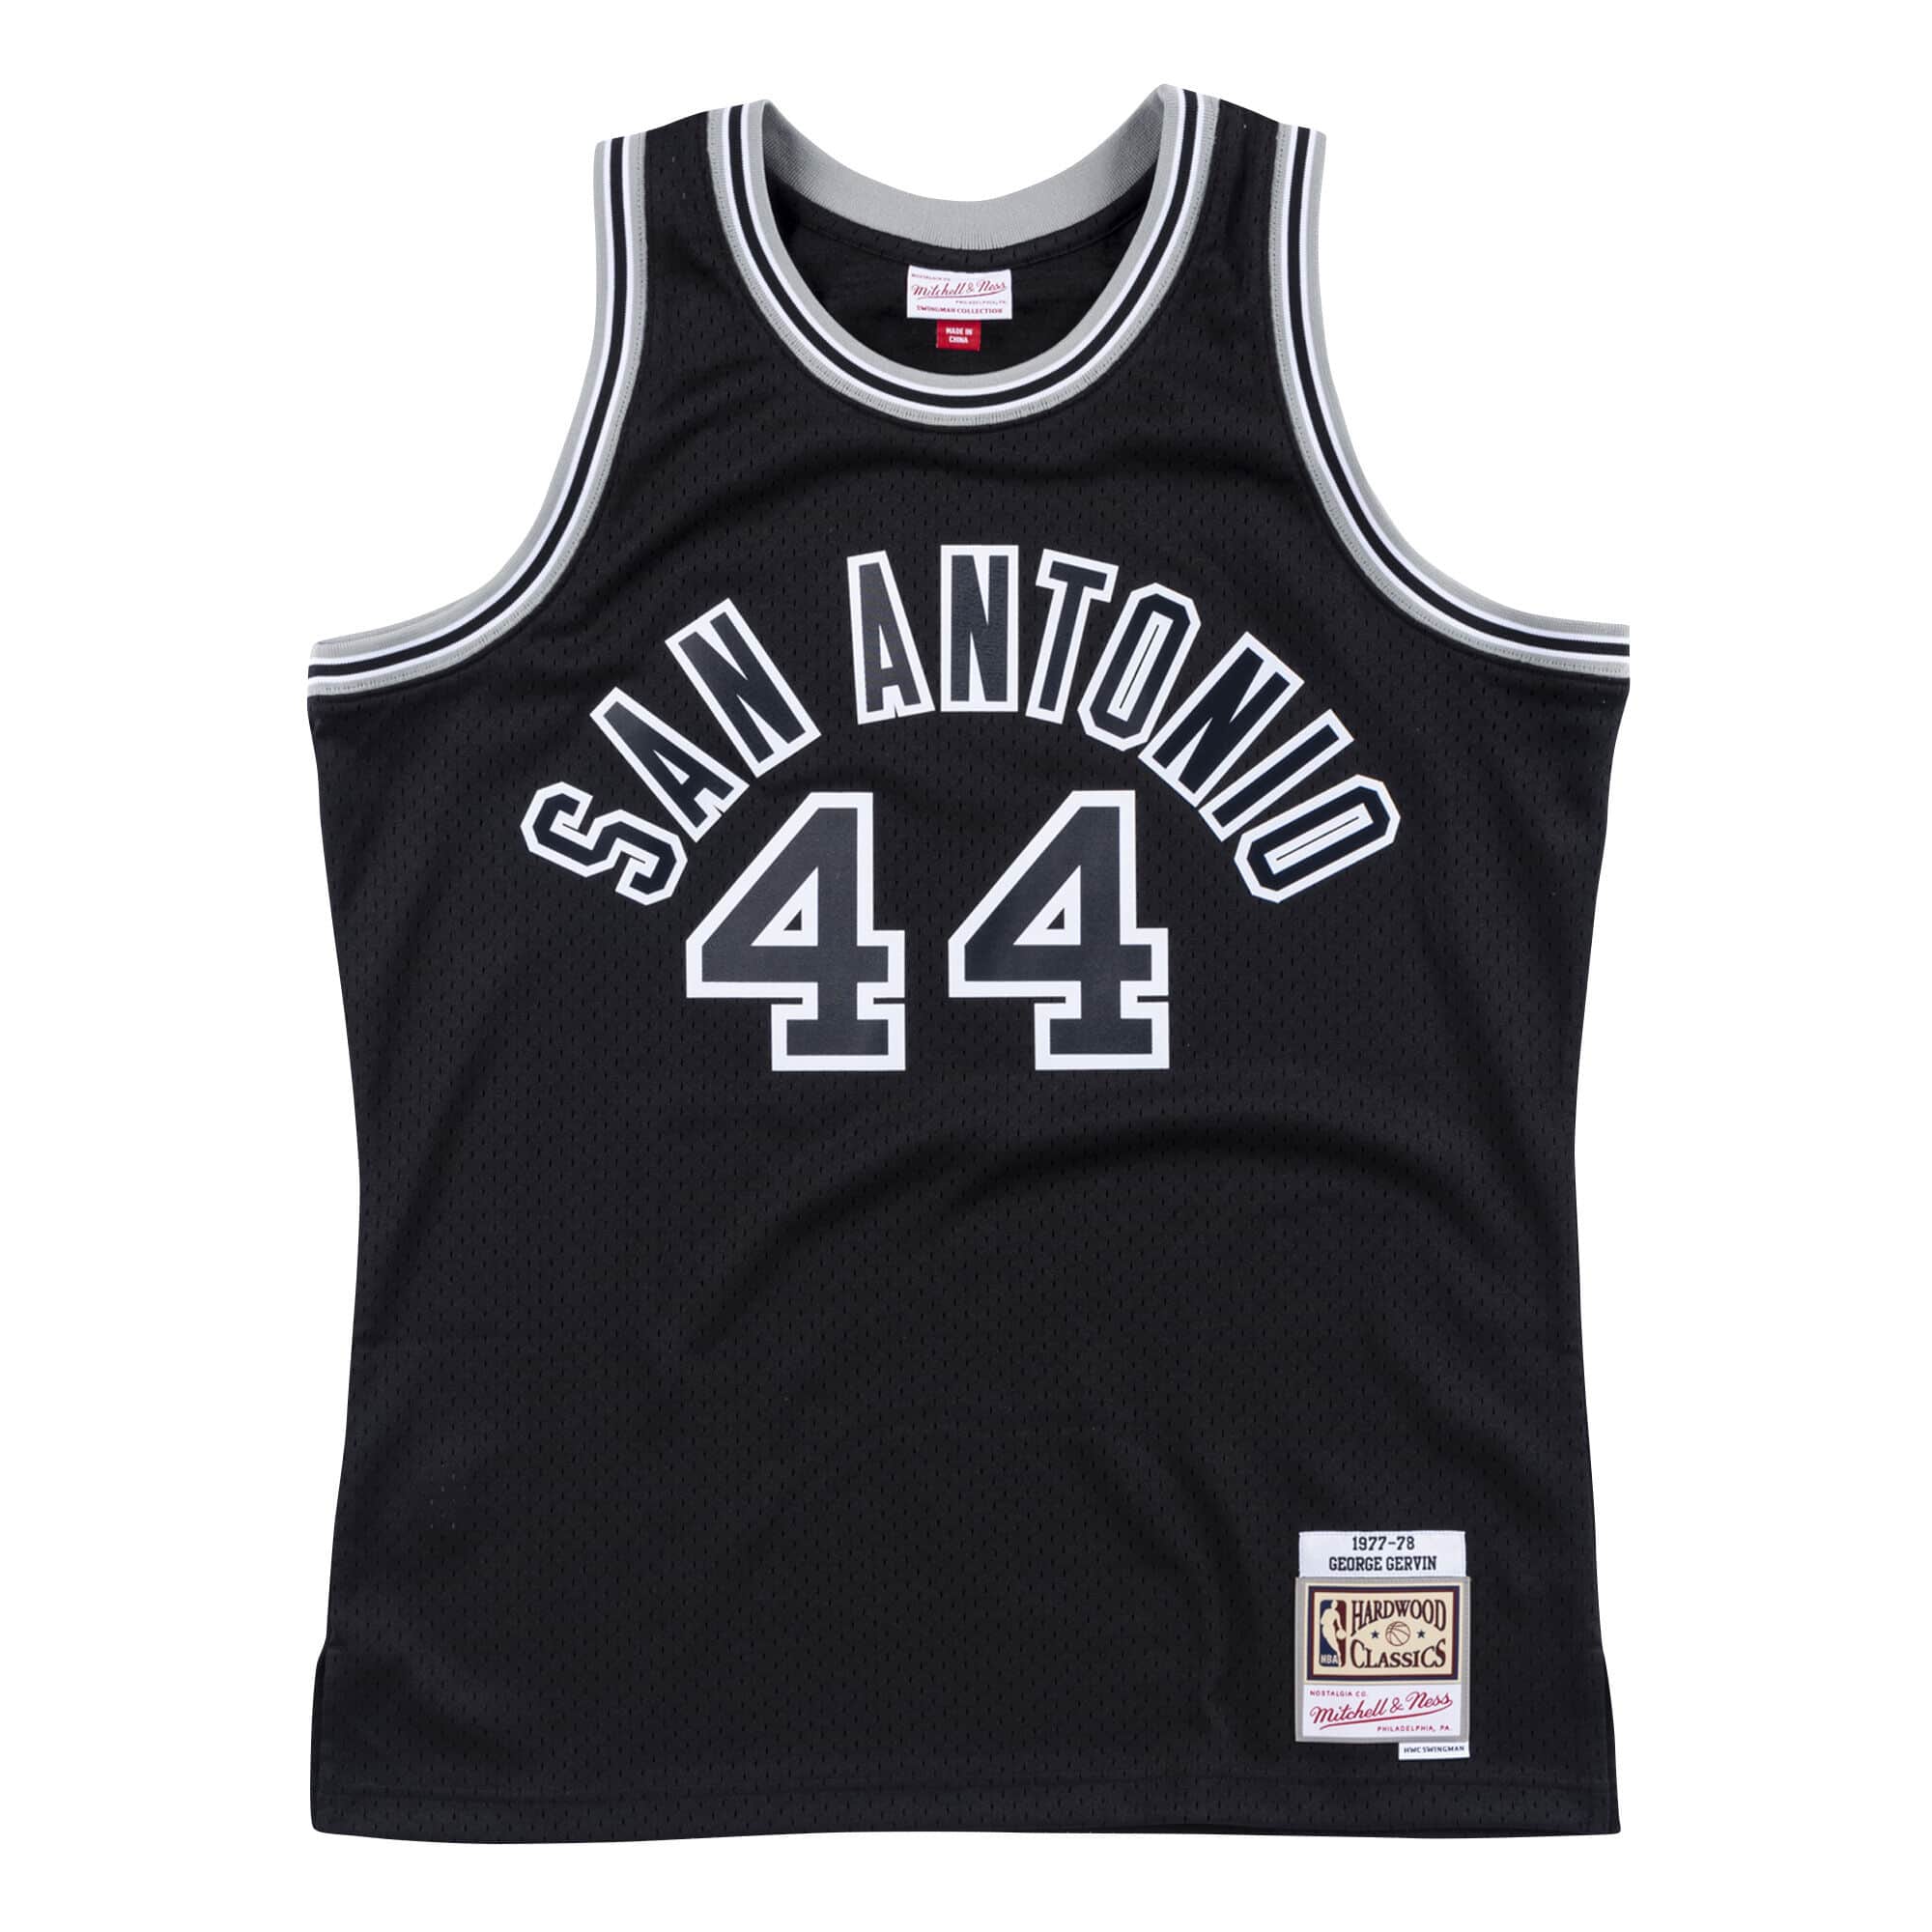 Vintage NBA San Antonio Spurs George Gervin Basketball Jersey